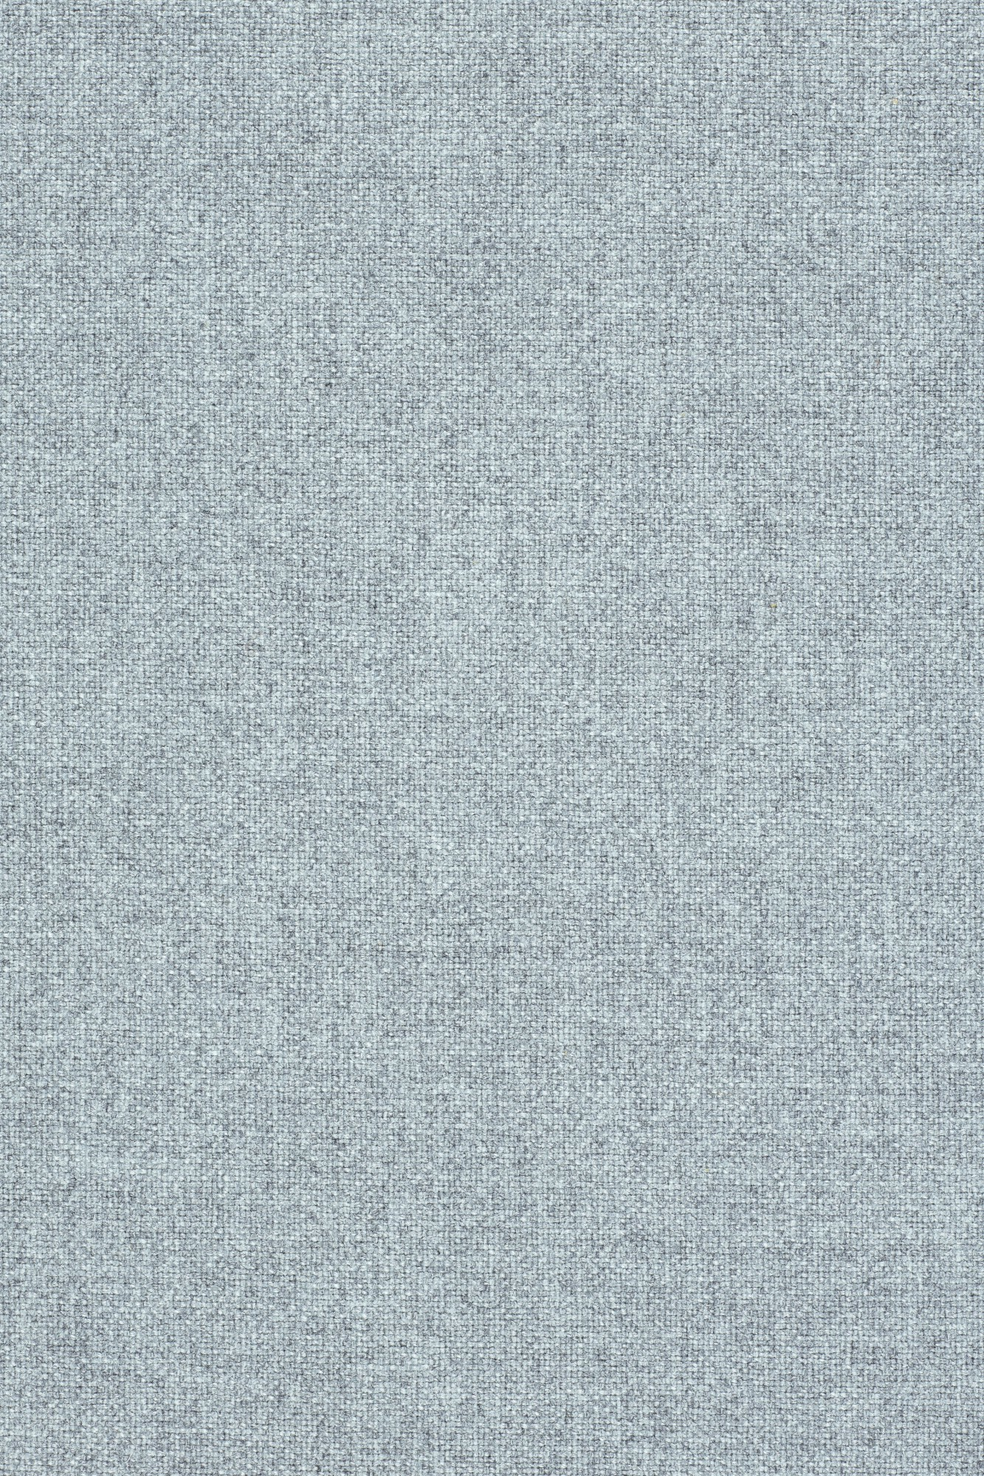 Fabric sample Tonica 2 123 grey